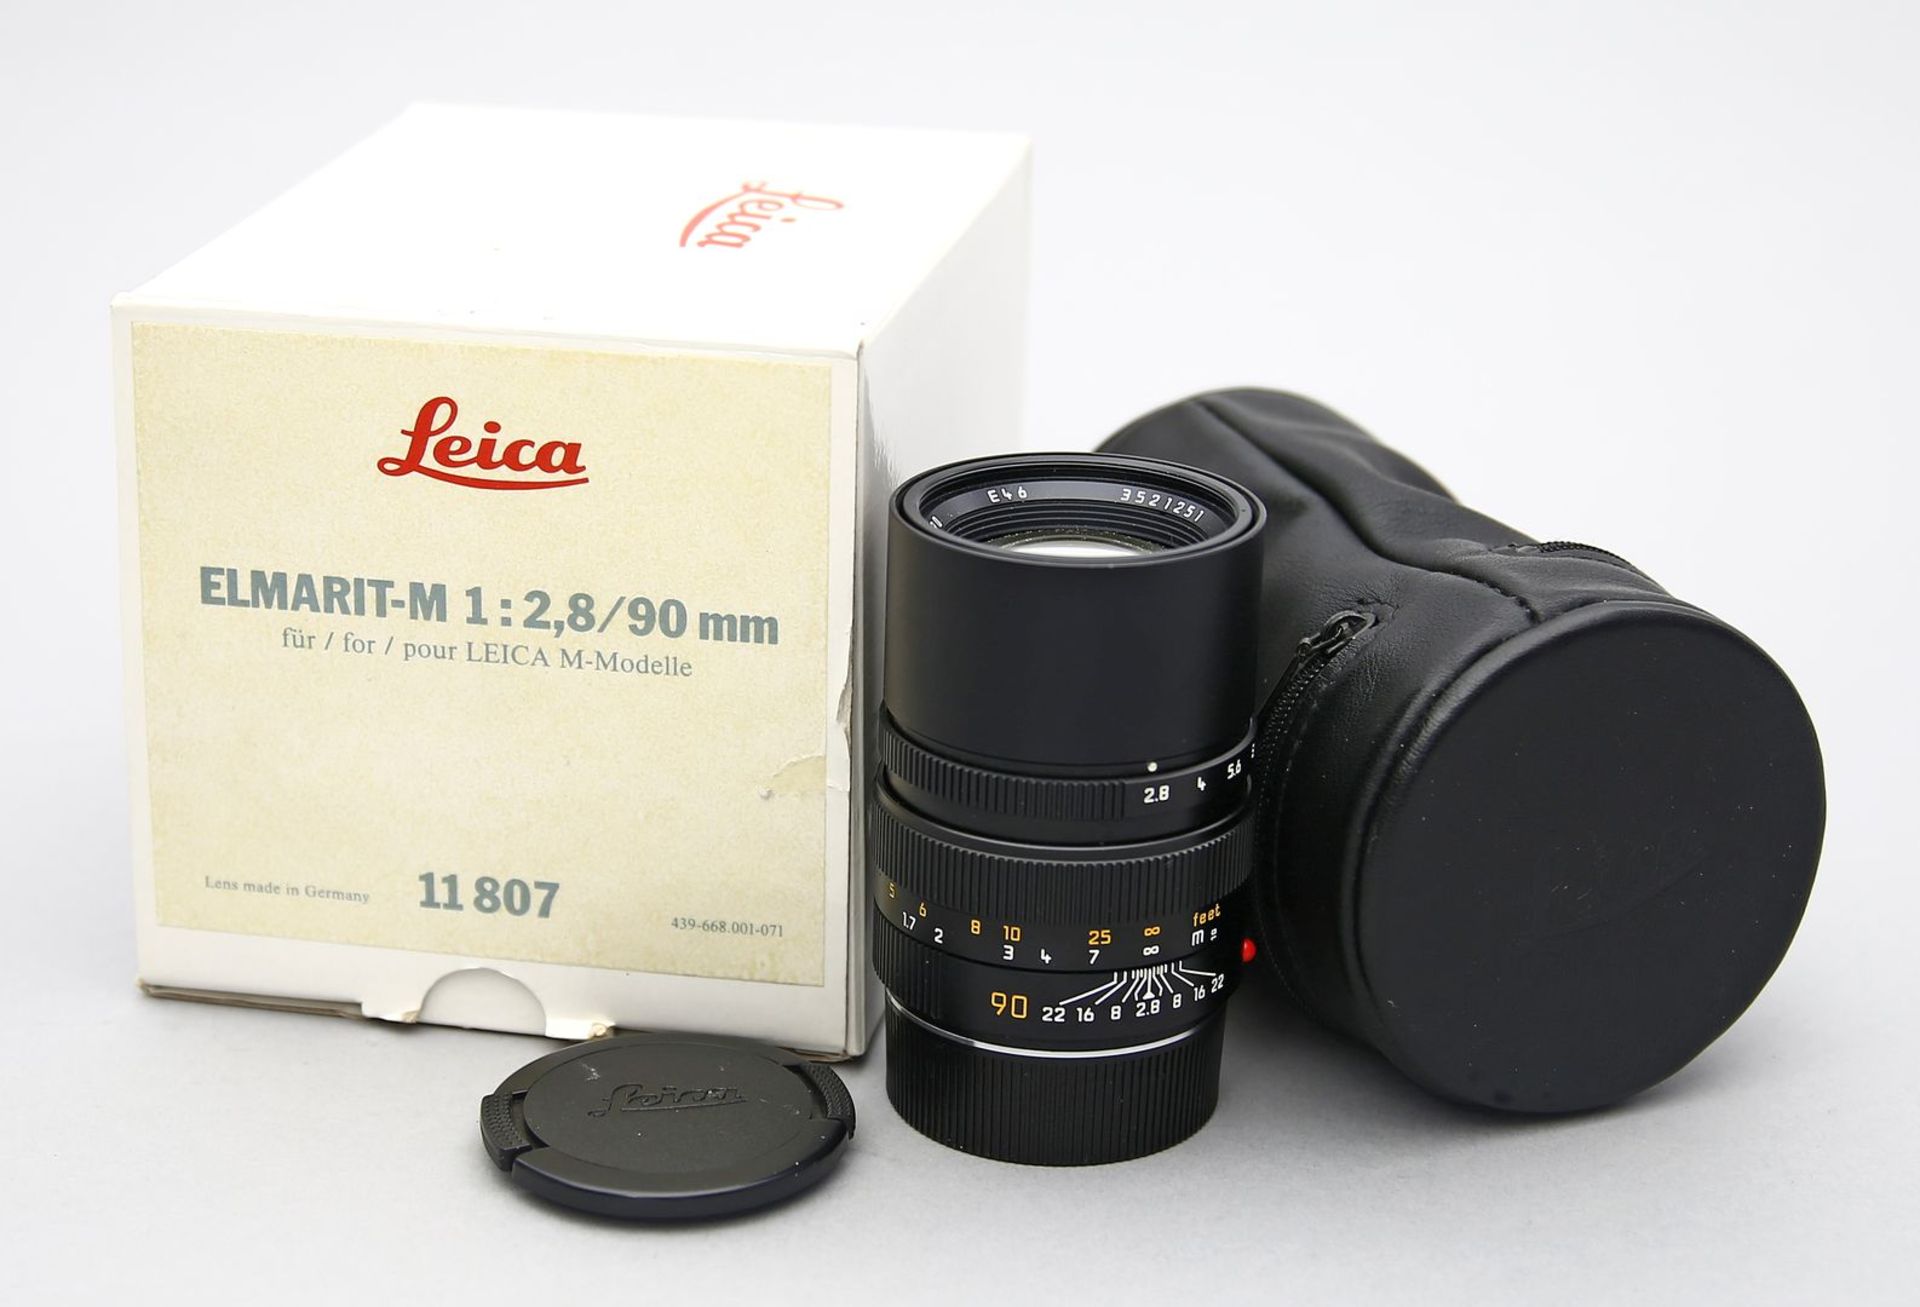 Objektiv "ELMARIT-M 1:2.8/90", Leica.